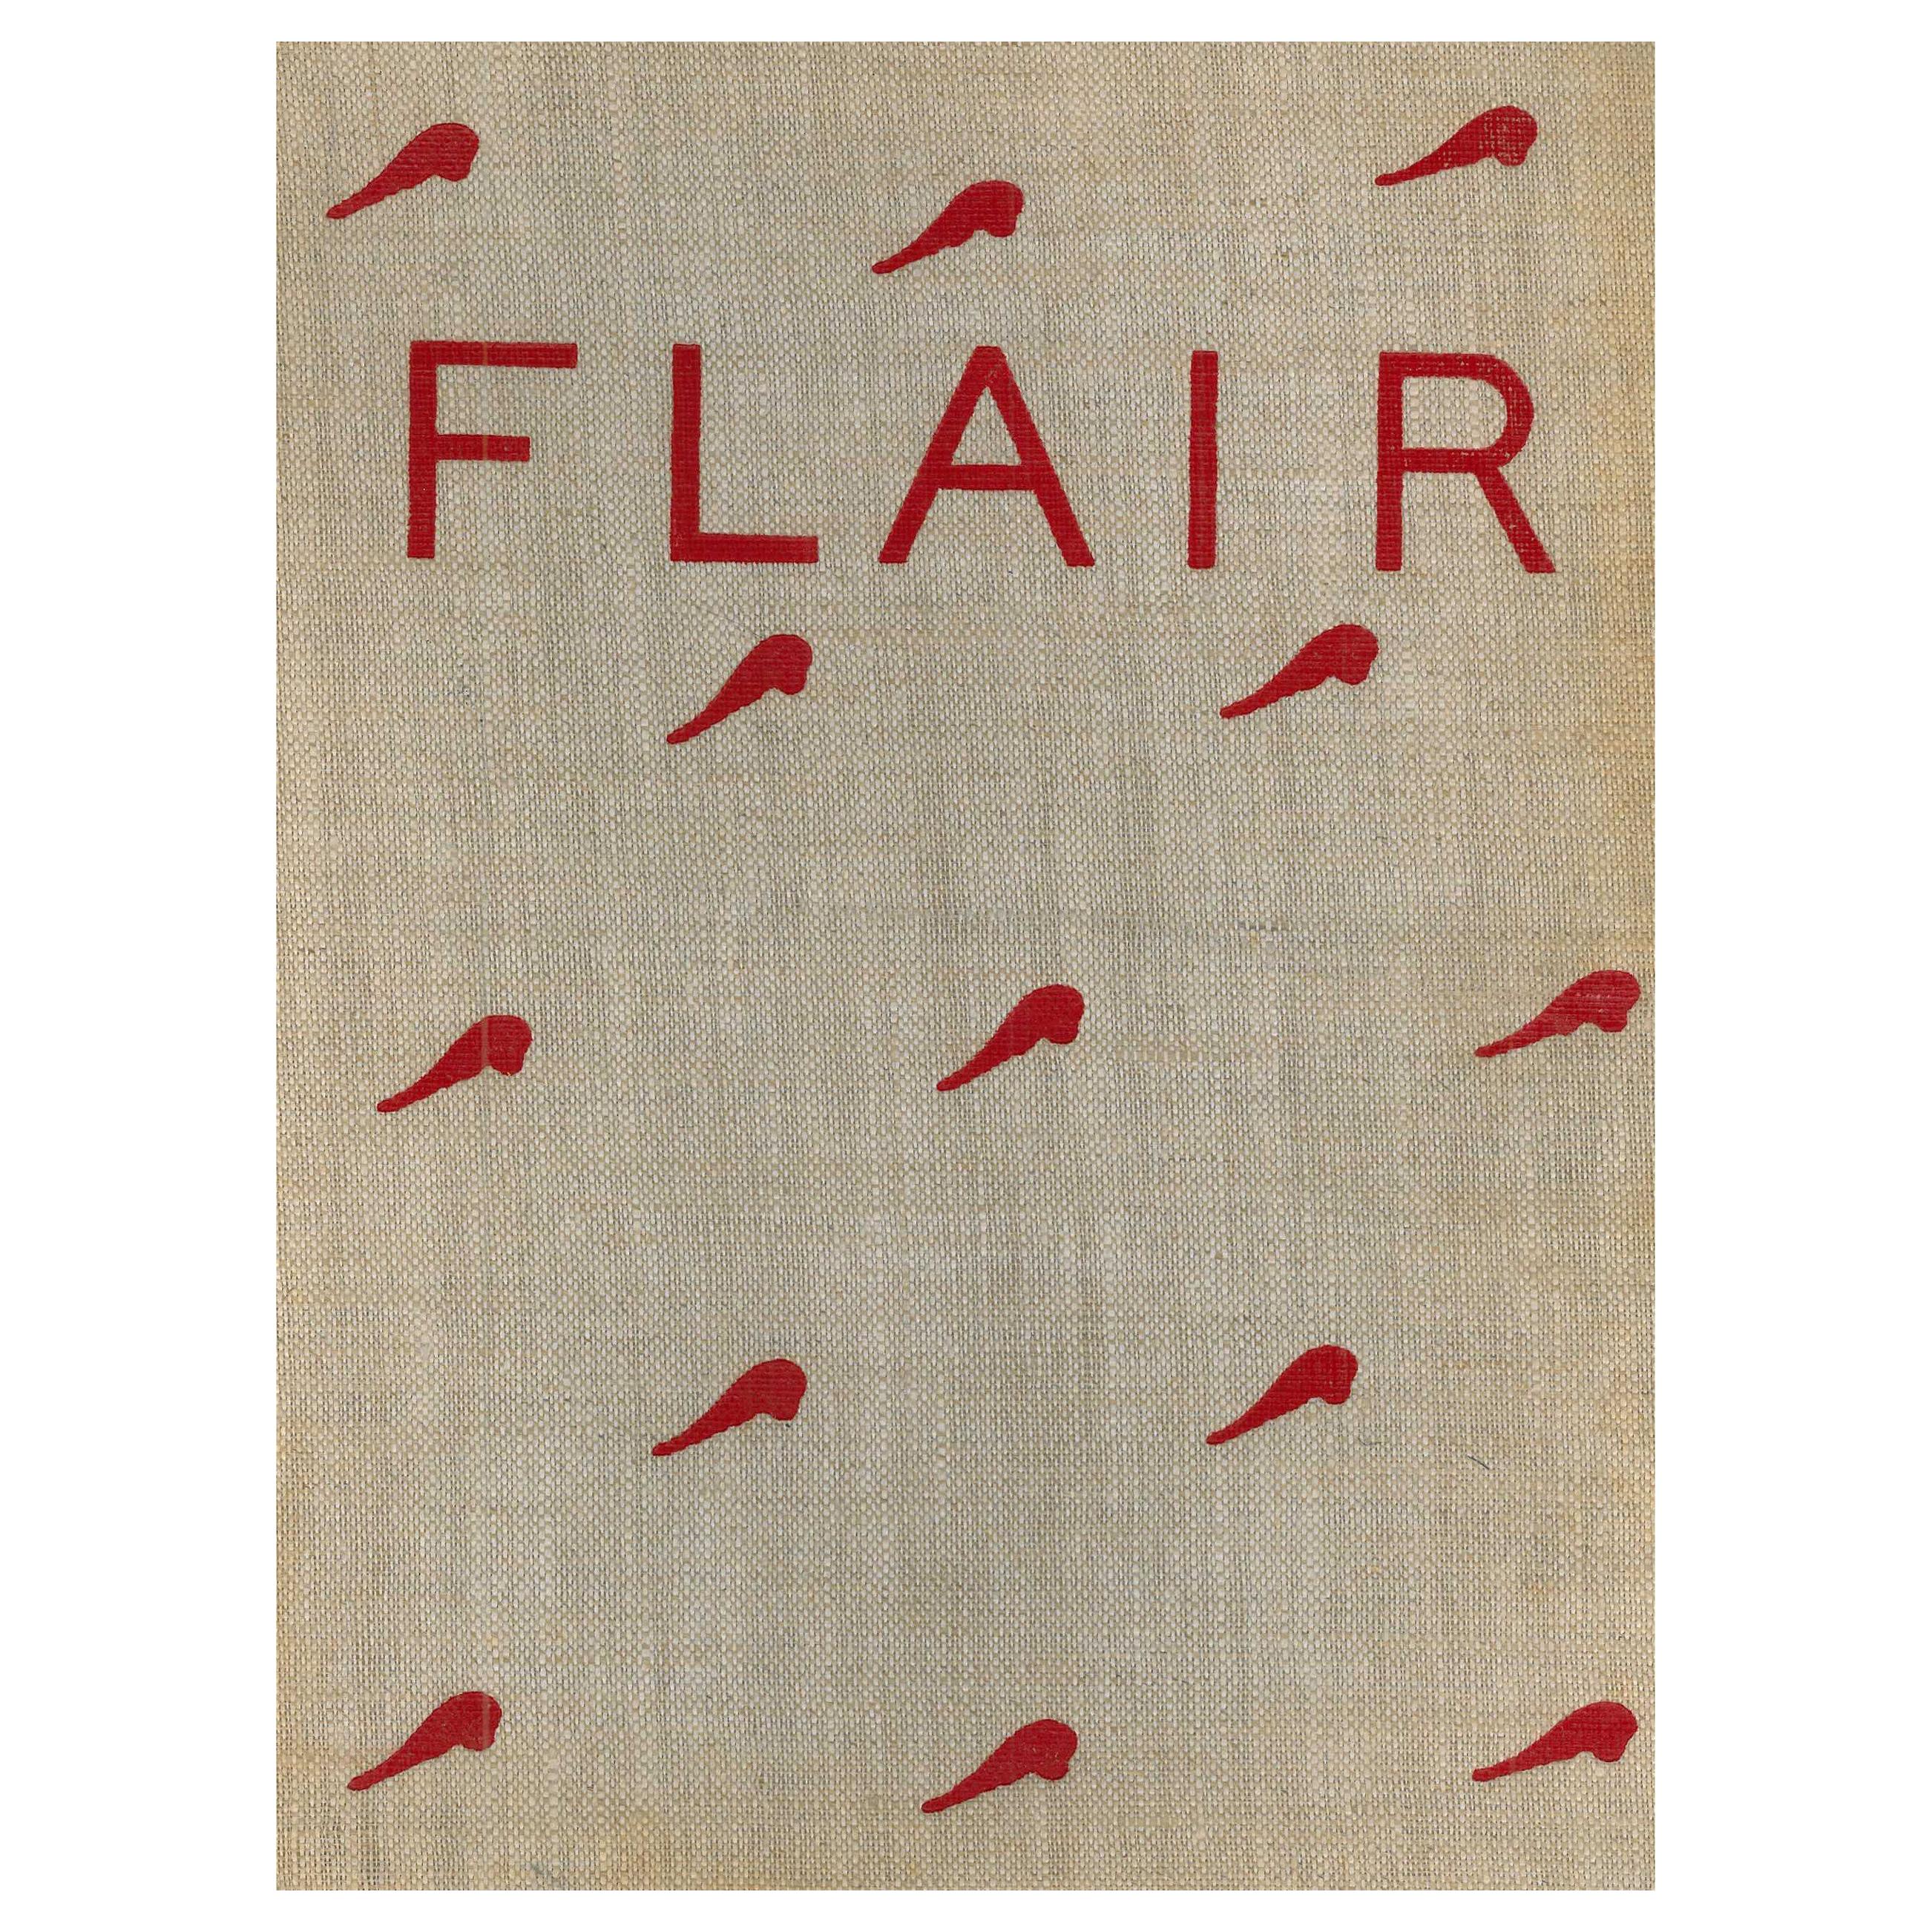 Flair Magazine, Complete Set, February 1950 to January 1951 (Book)